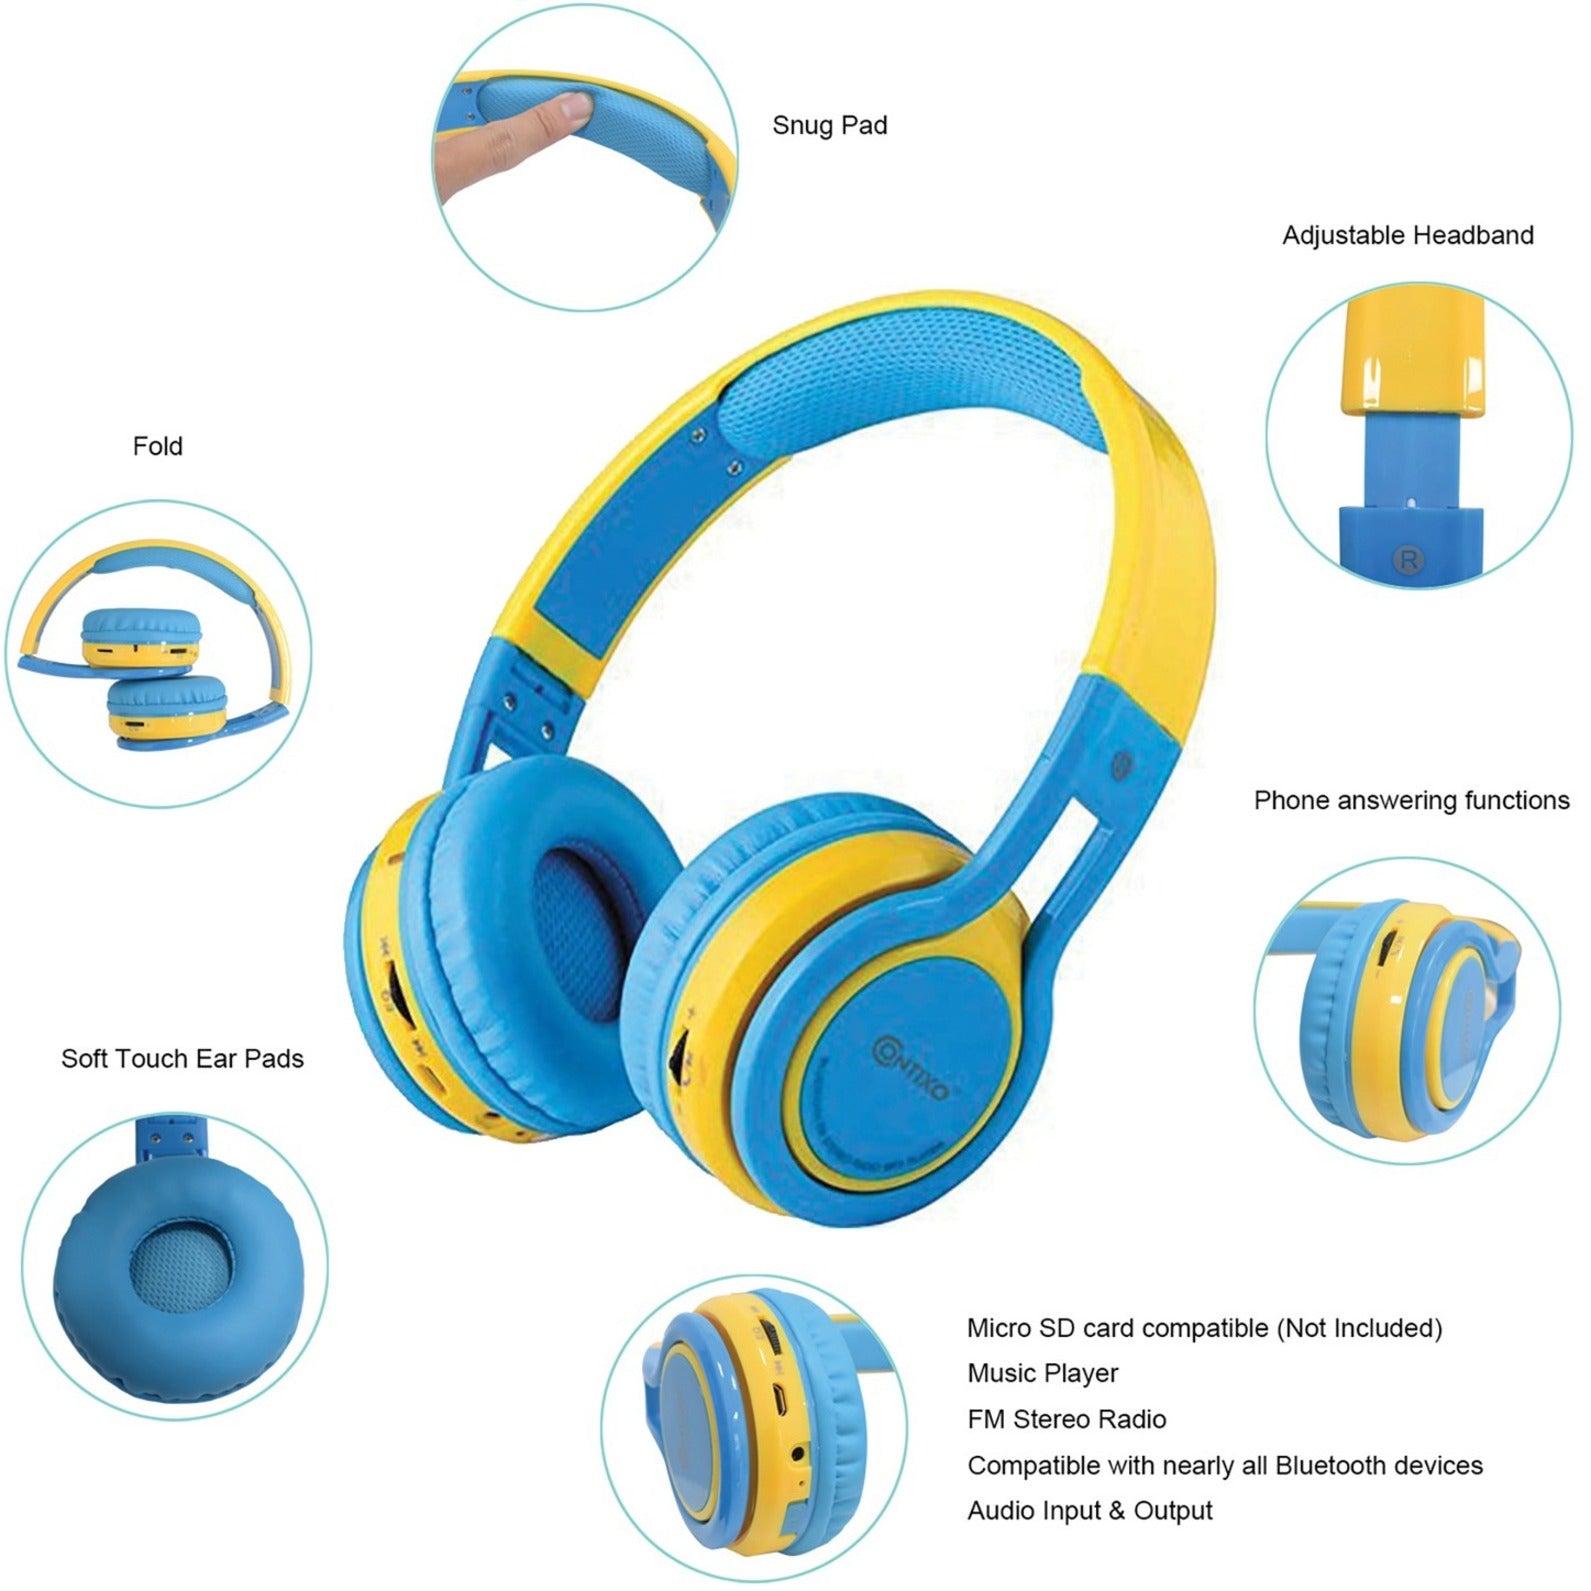 Contixo KB2600 Kid Safe Foldable Wireless Bluetooth Headphone - Blue [Discontinued]